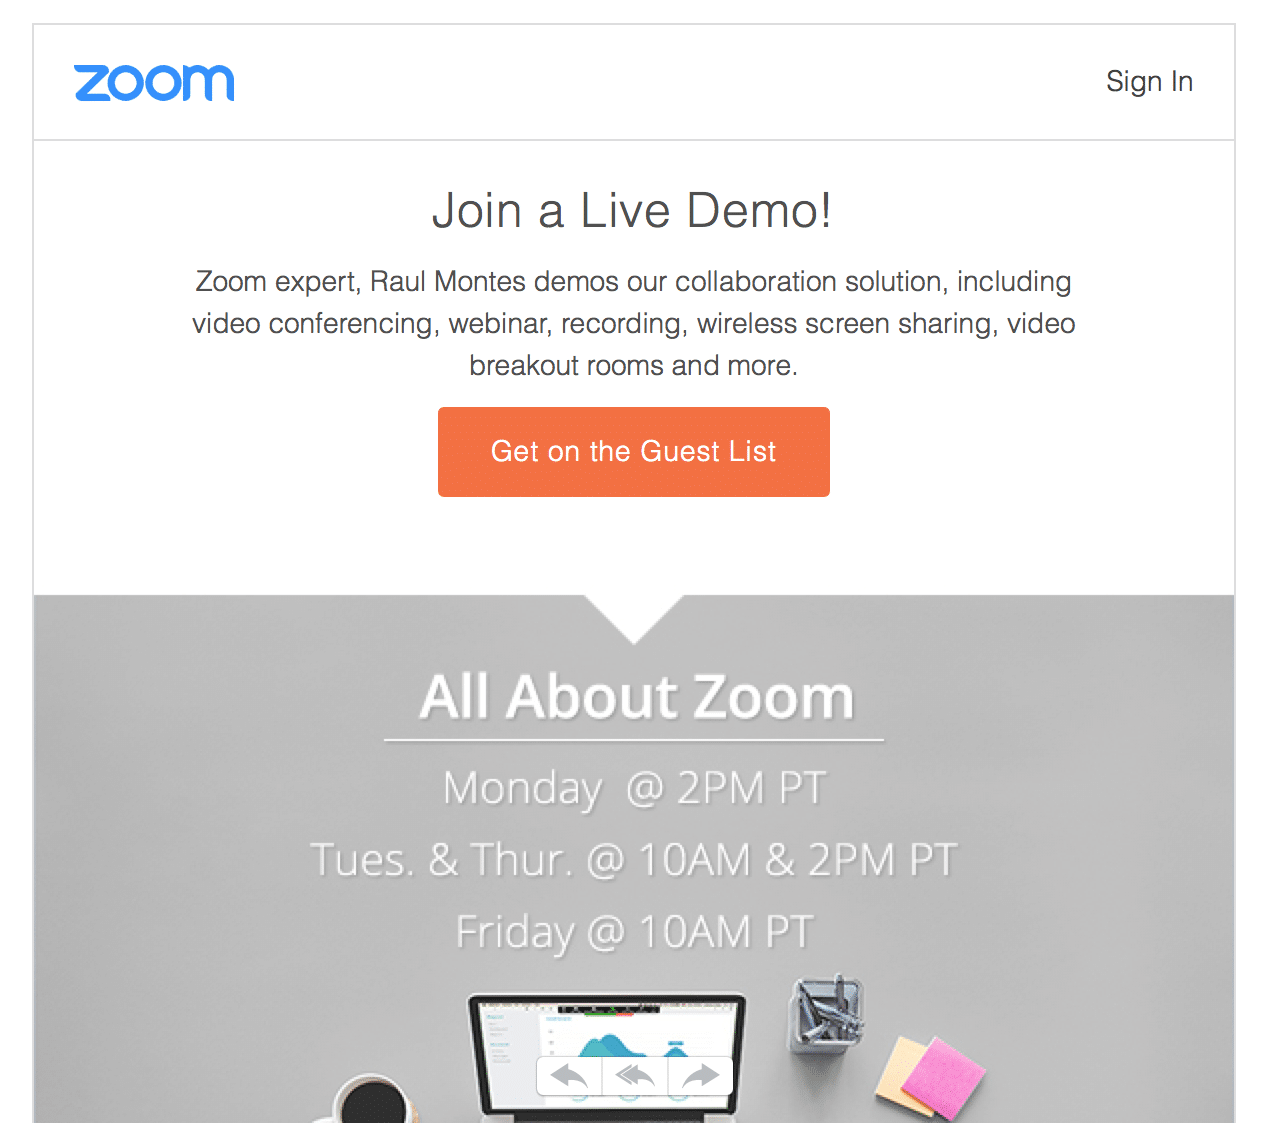 Zoom – CTA Marketing with Urgency